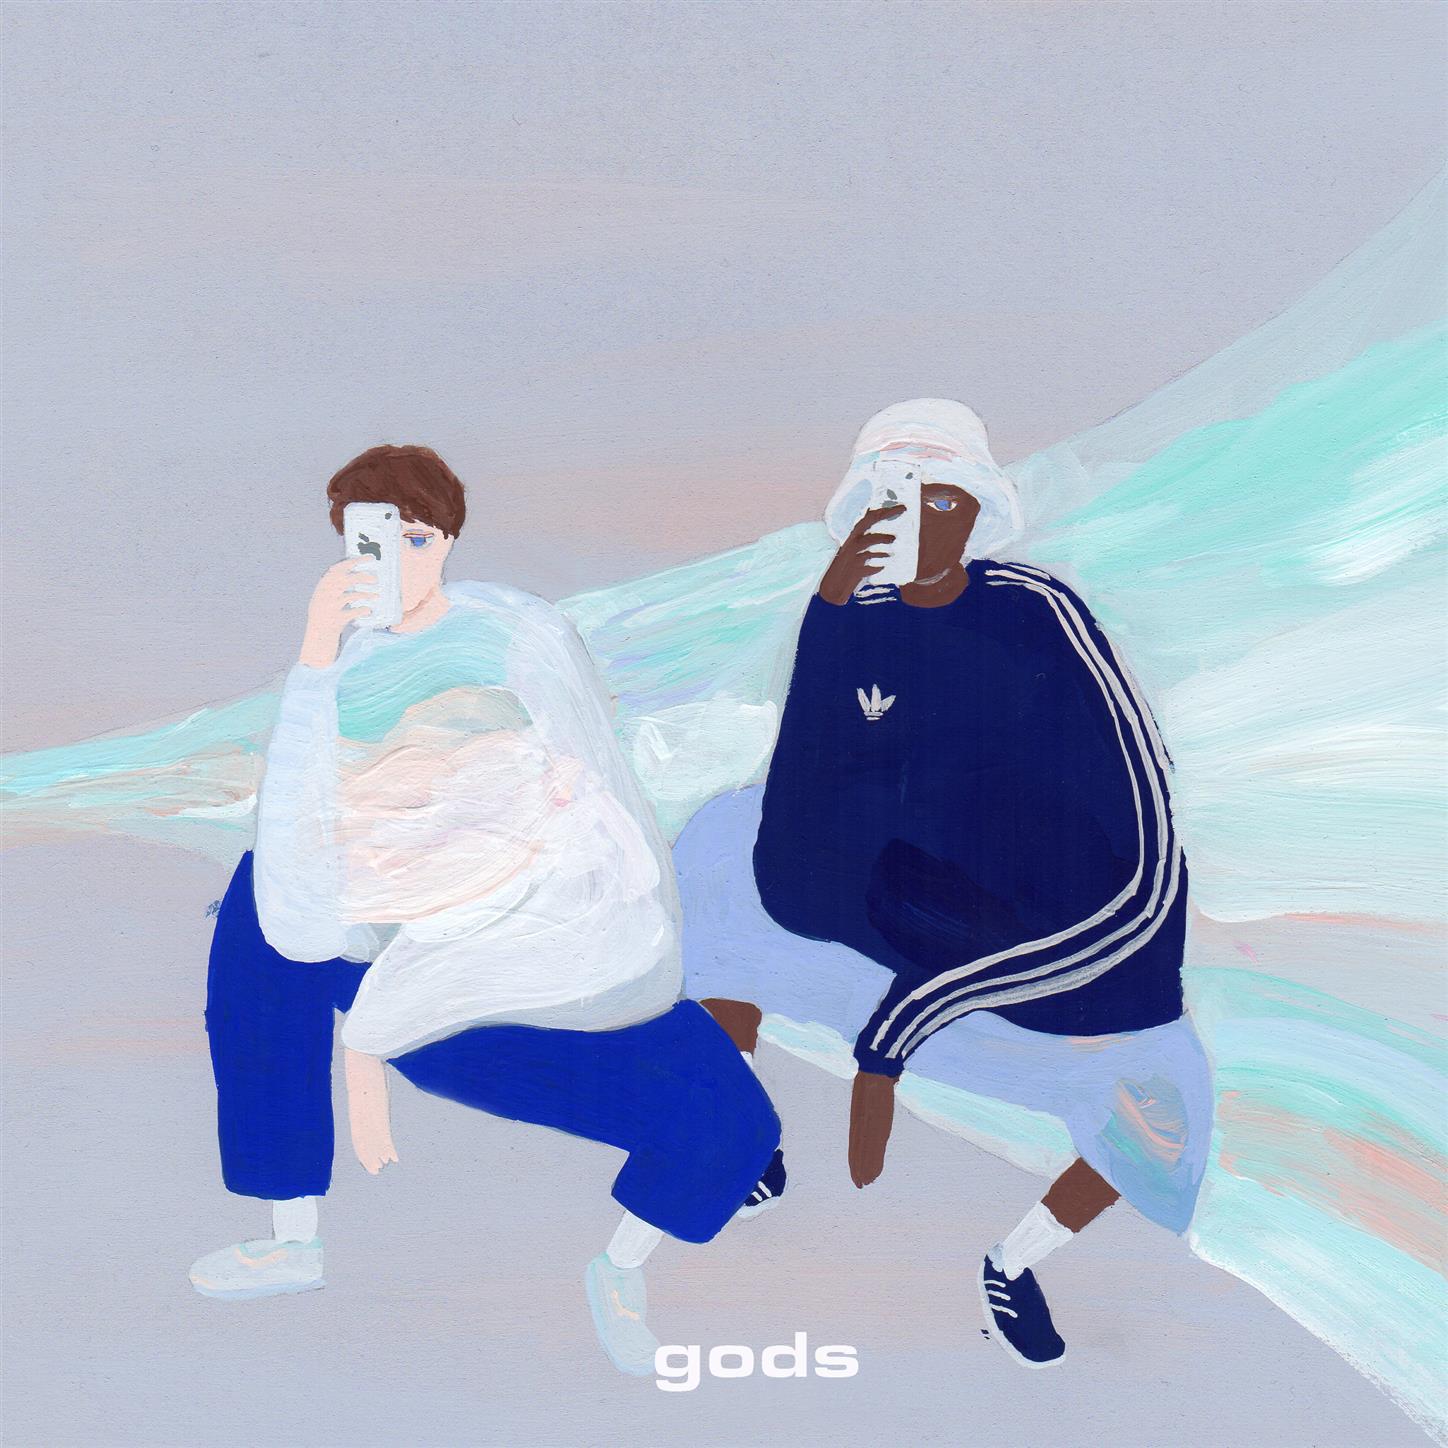 Gods (feat. UV boi)专辑